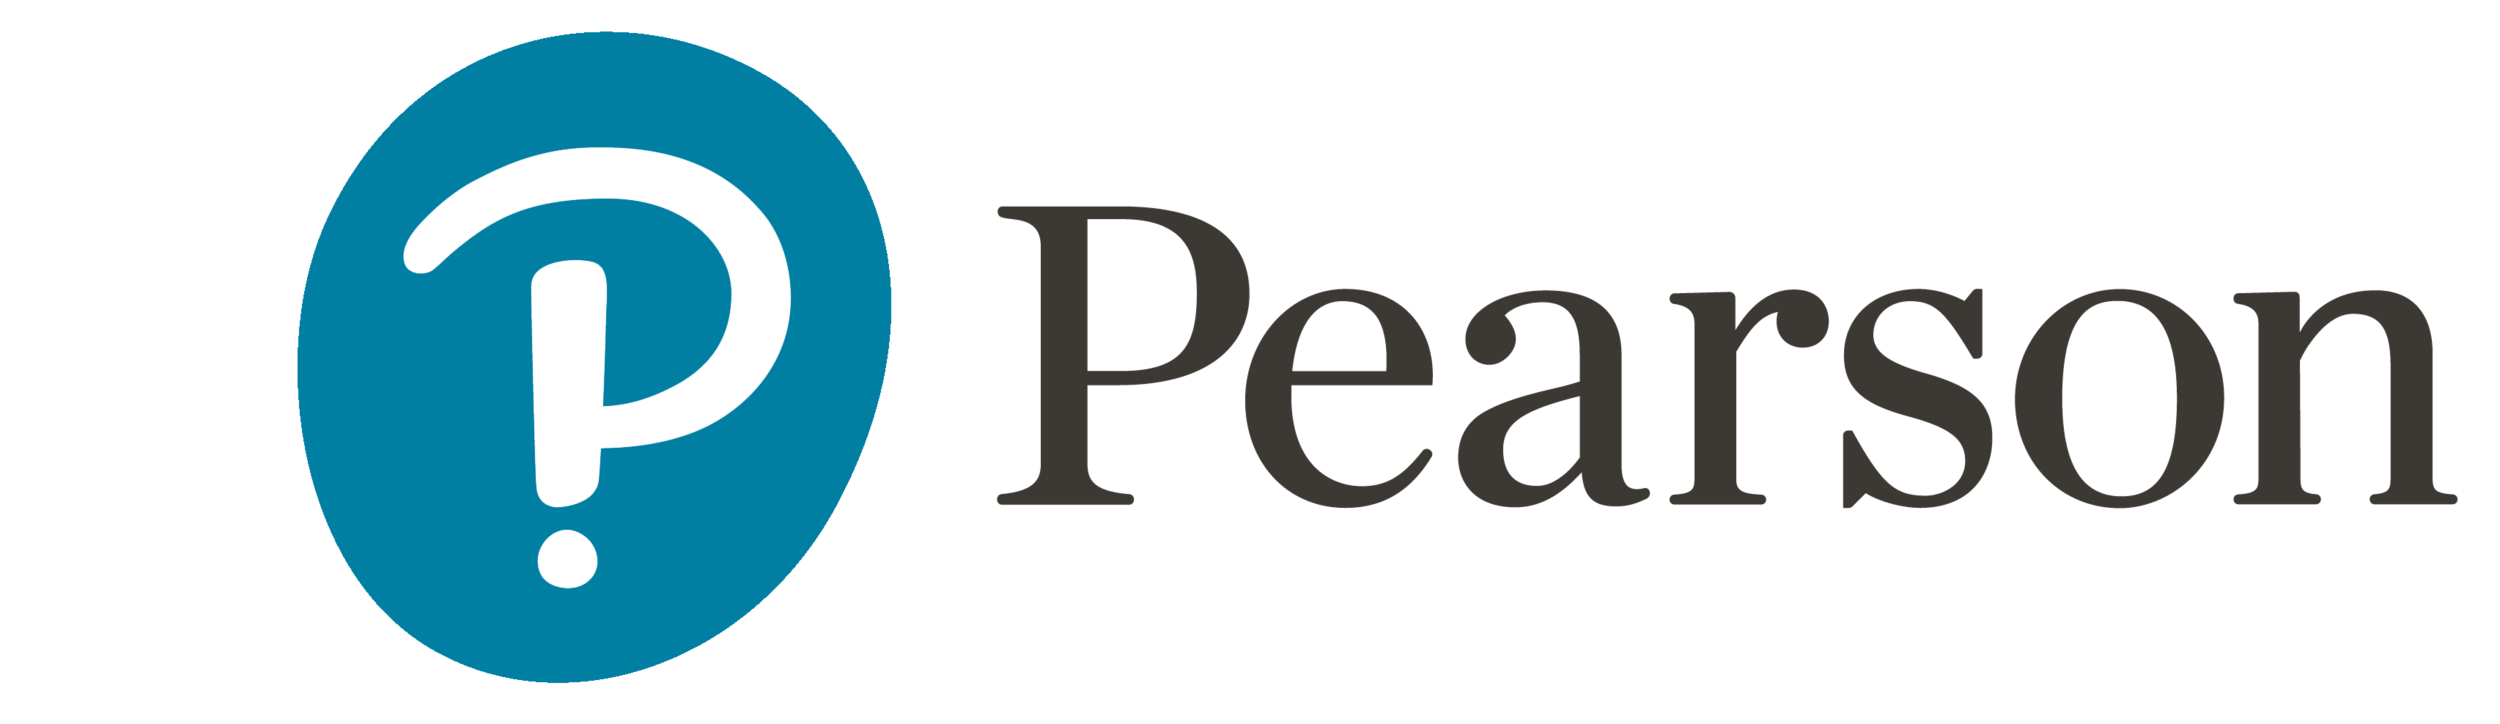 Pearson-logo.png